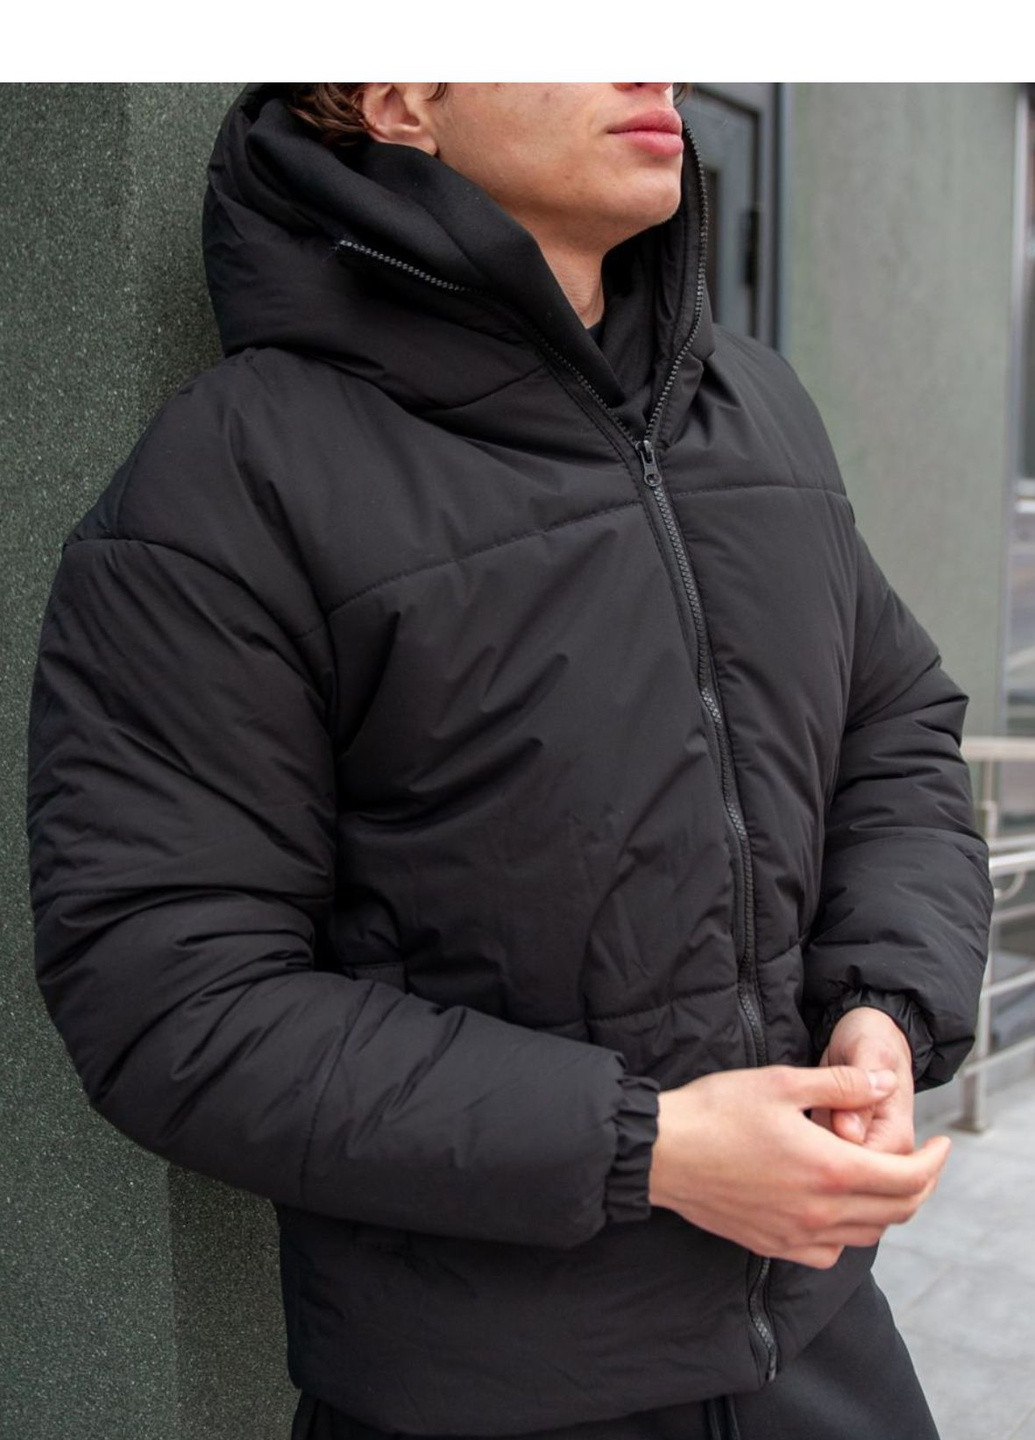 Черная зимняя зимняя мужская куртка No Brand